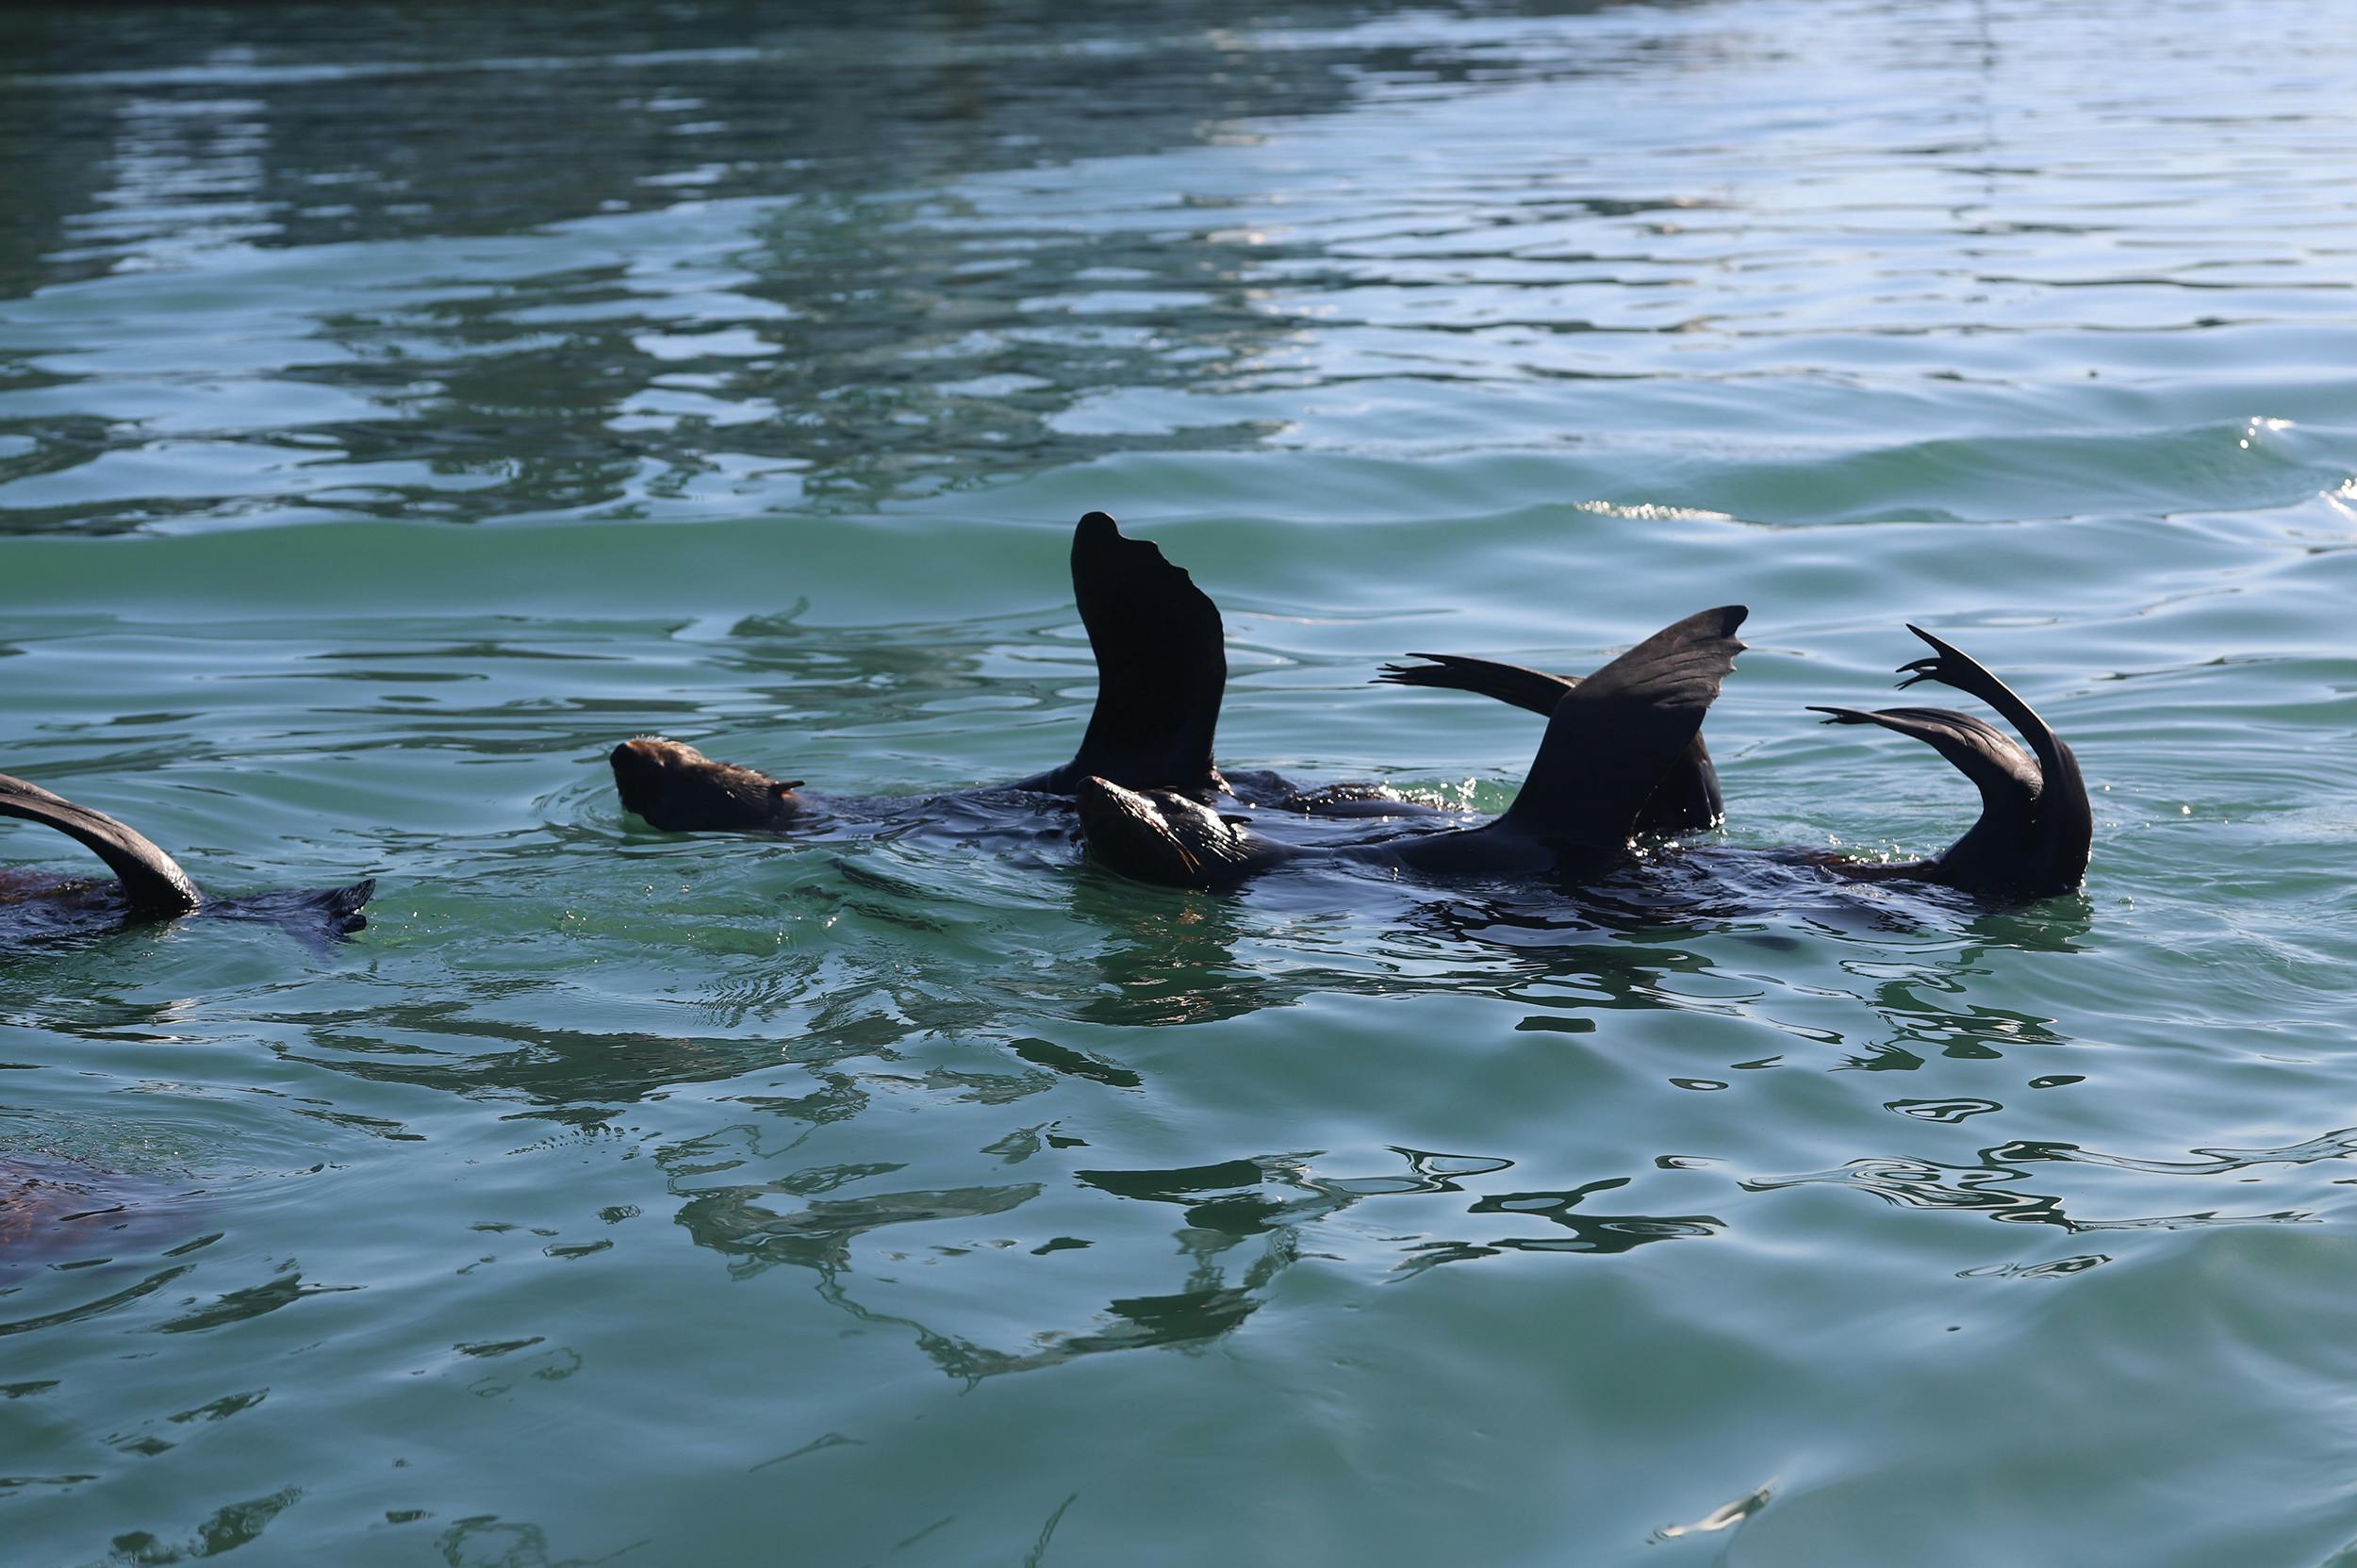 hout bay seal island cruise photos